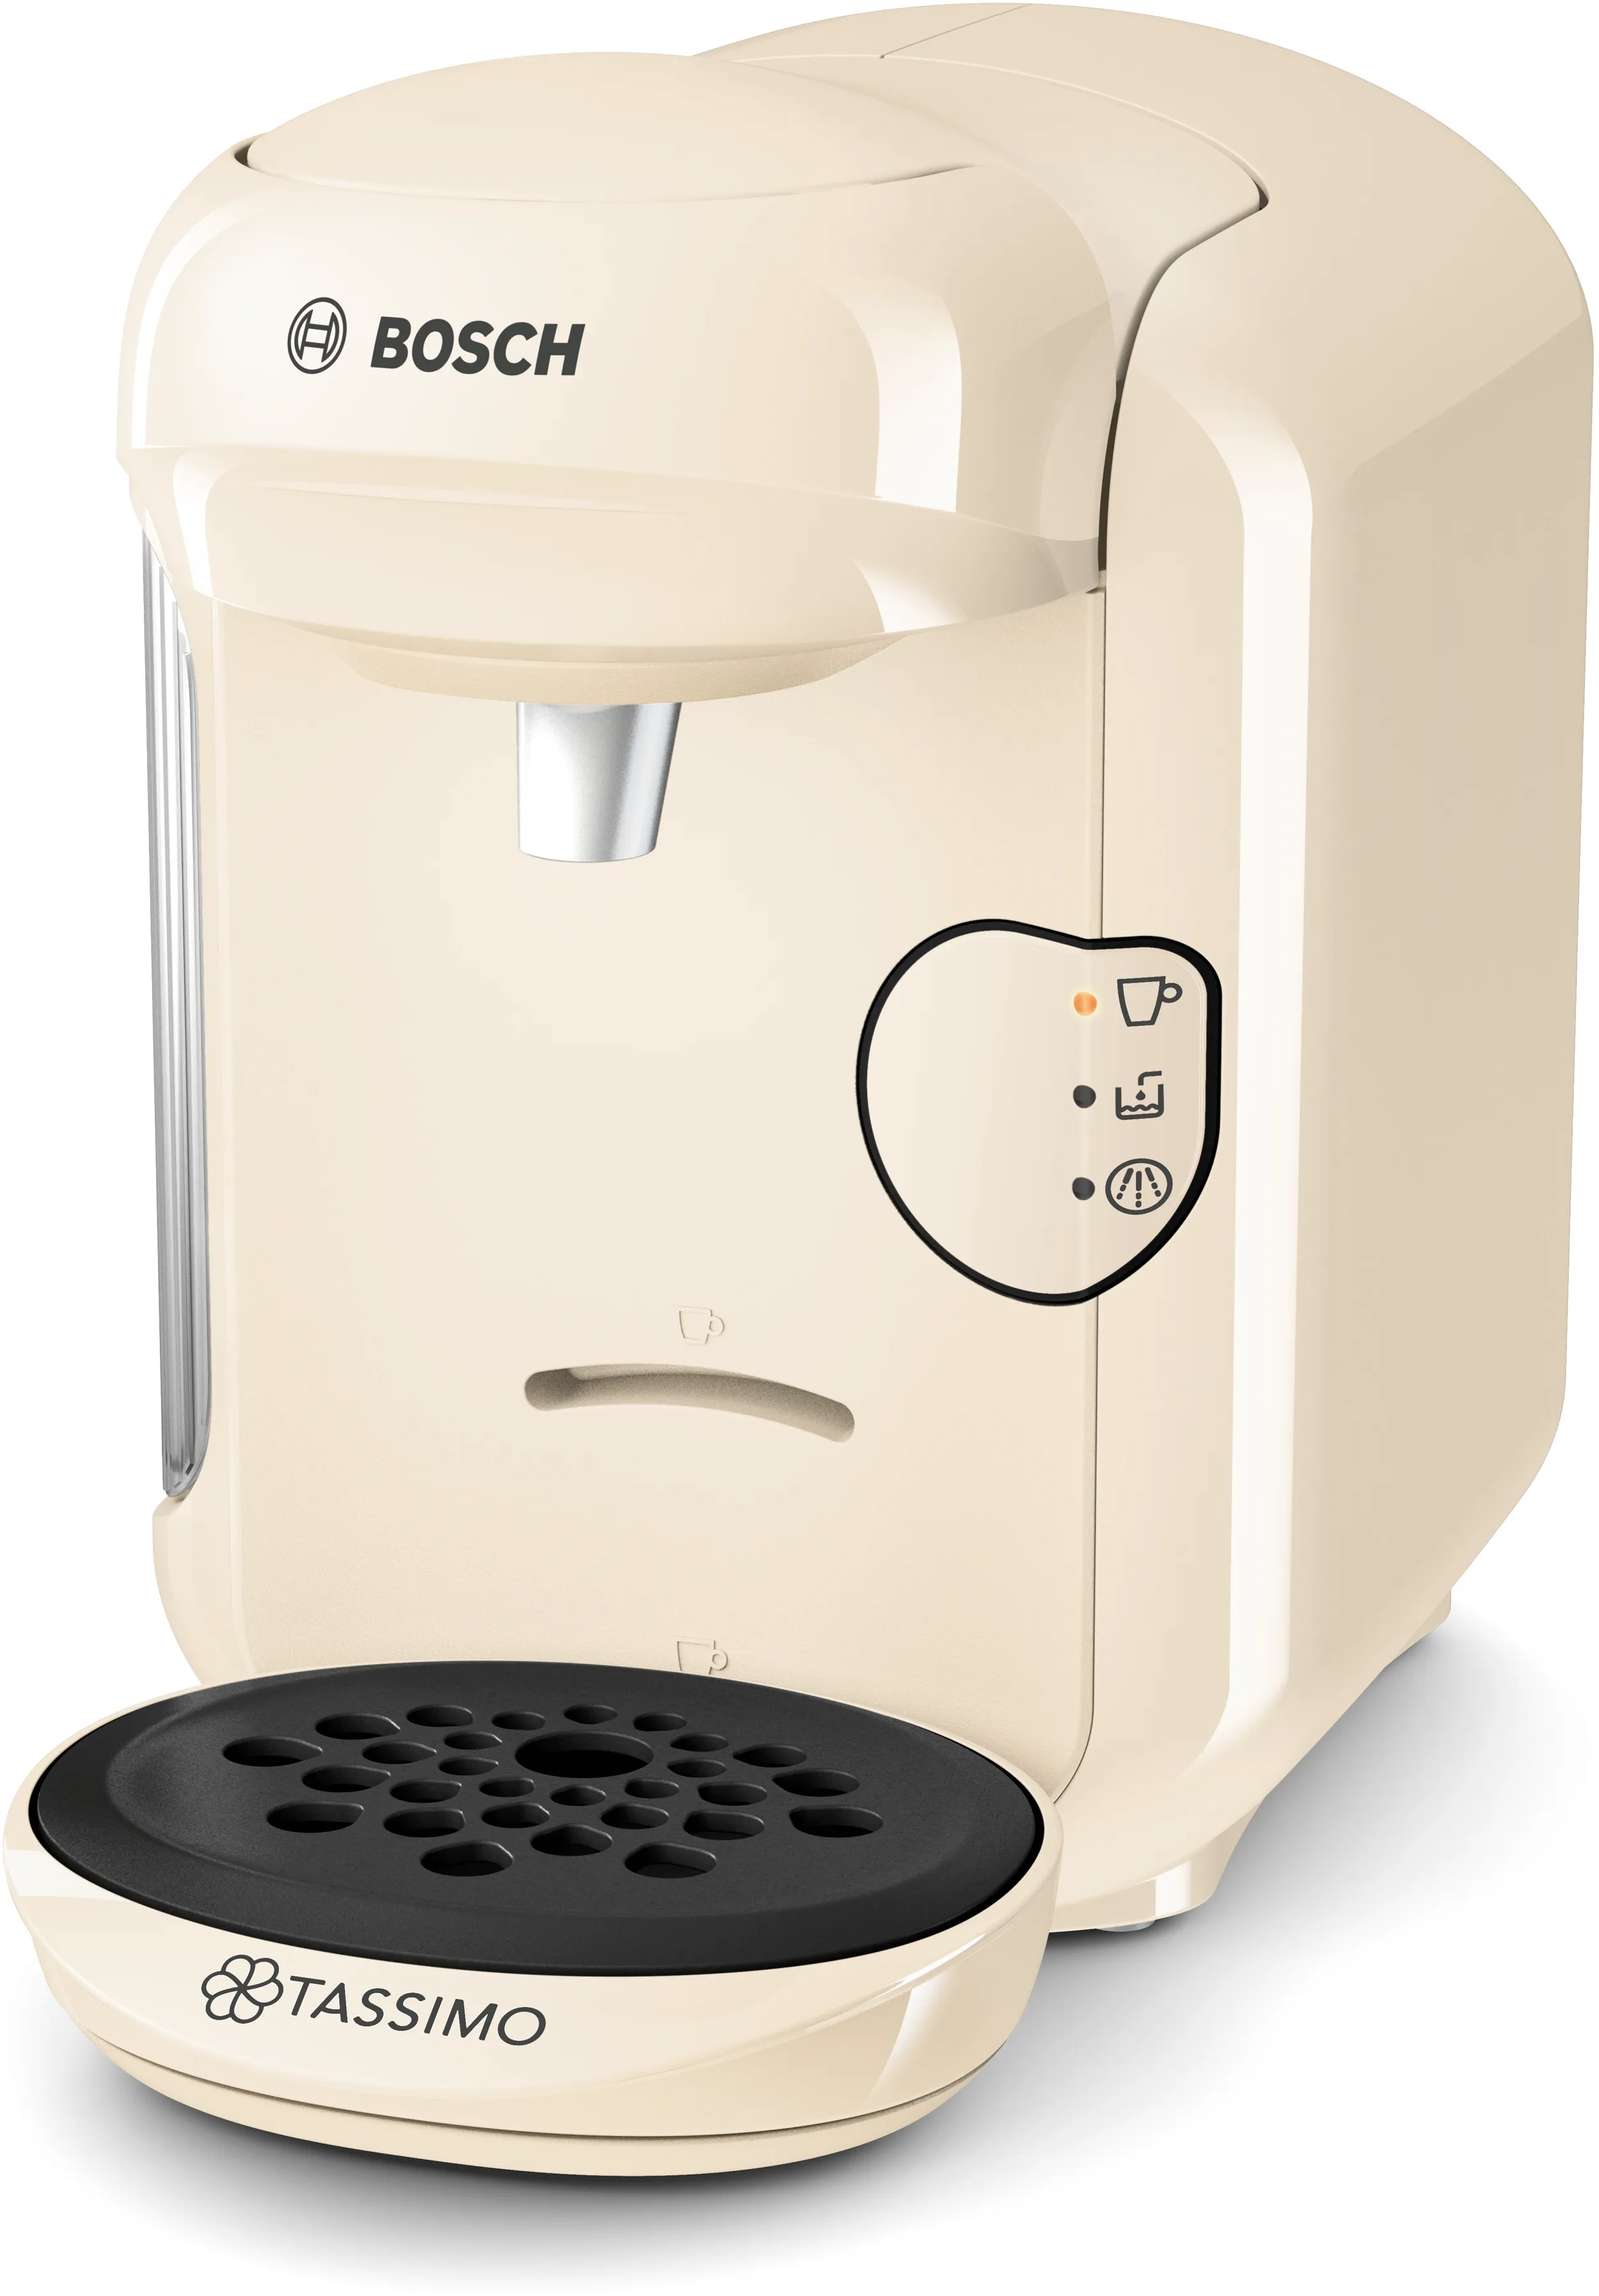 Hot drinks machine TASSIMO VIVY 2 